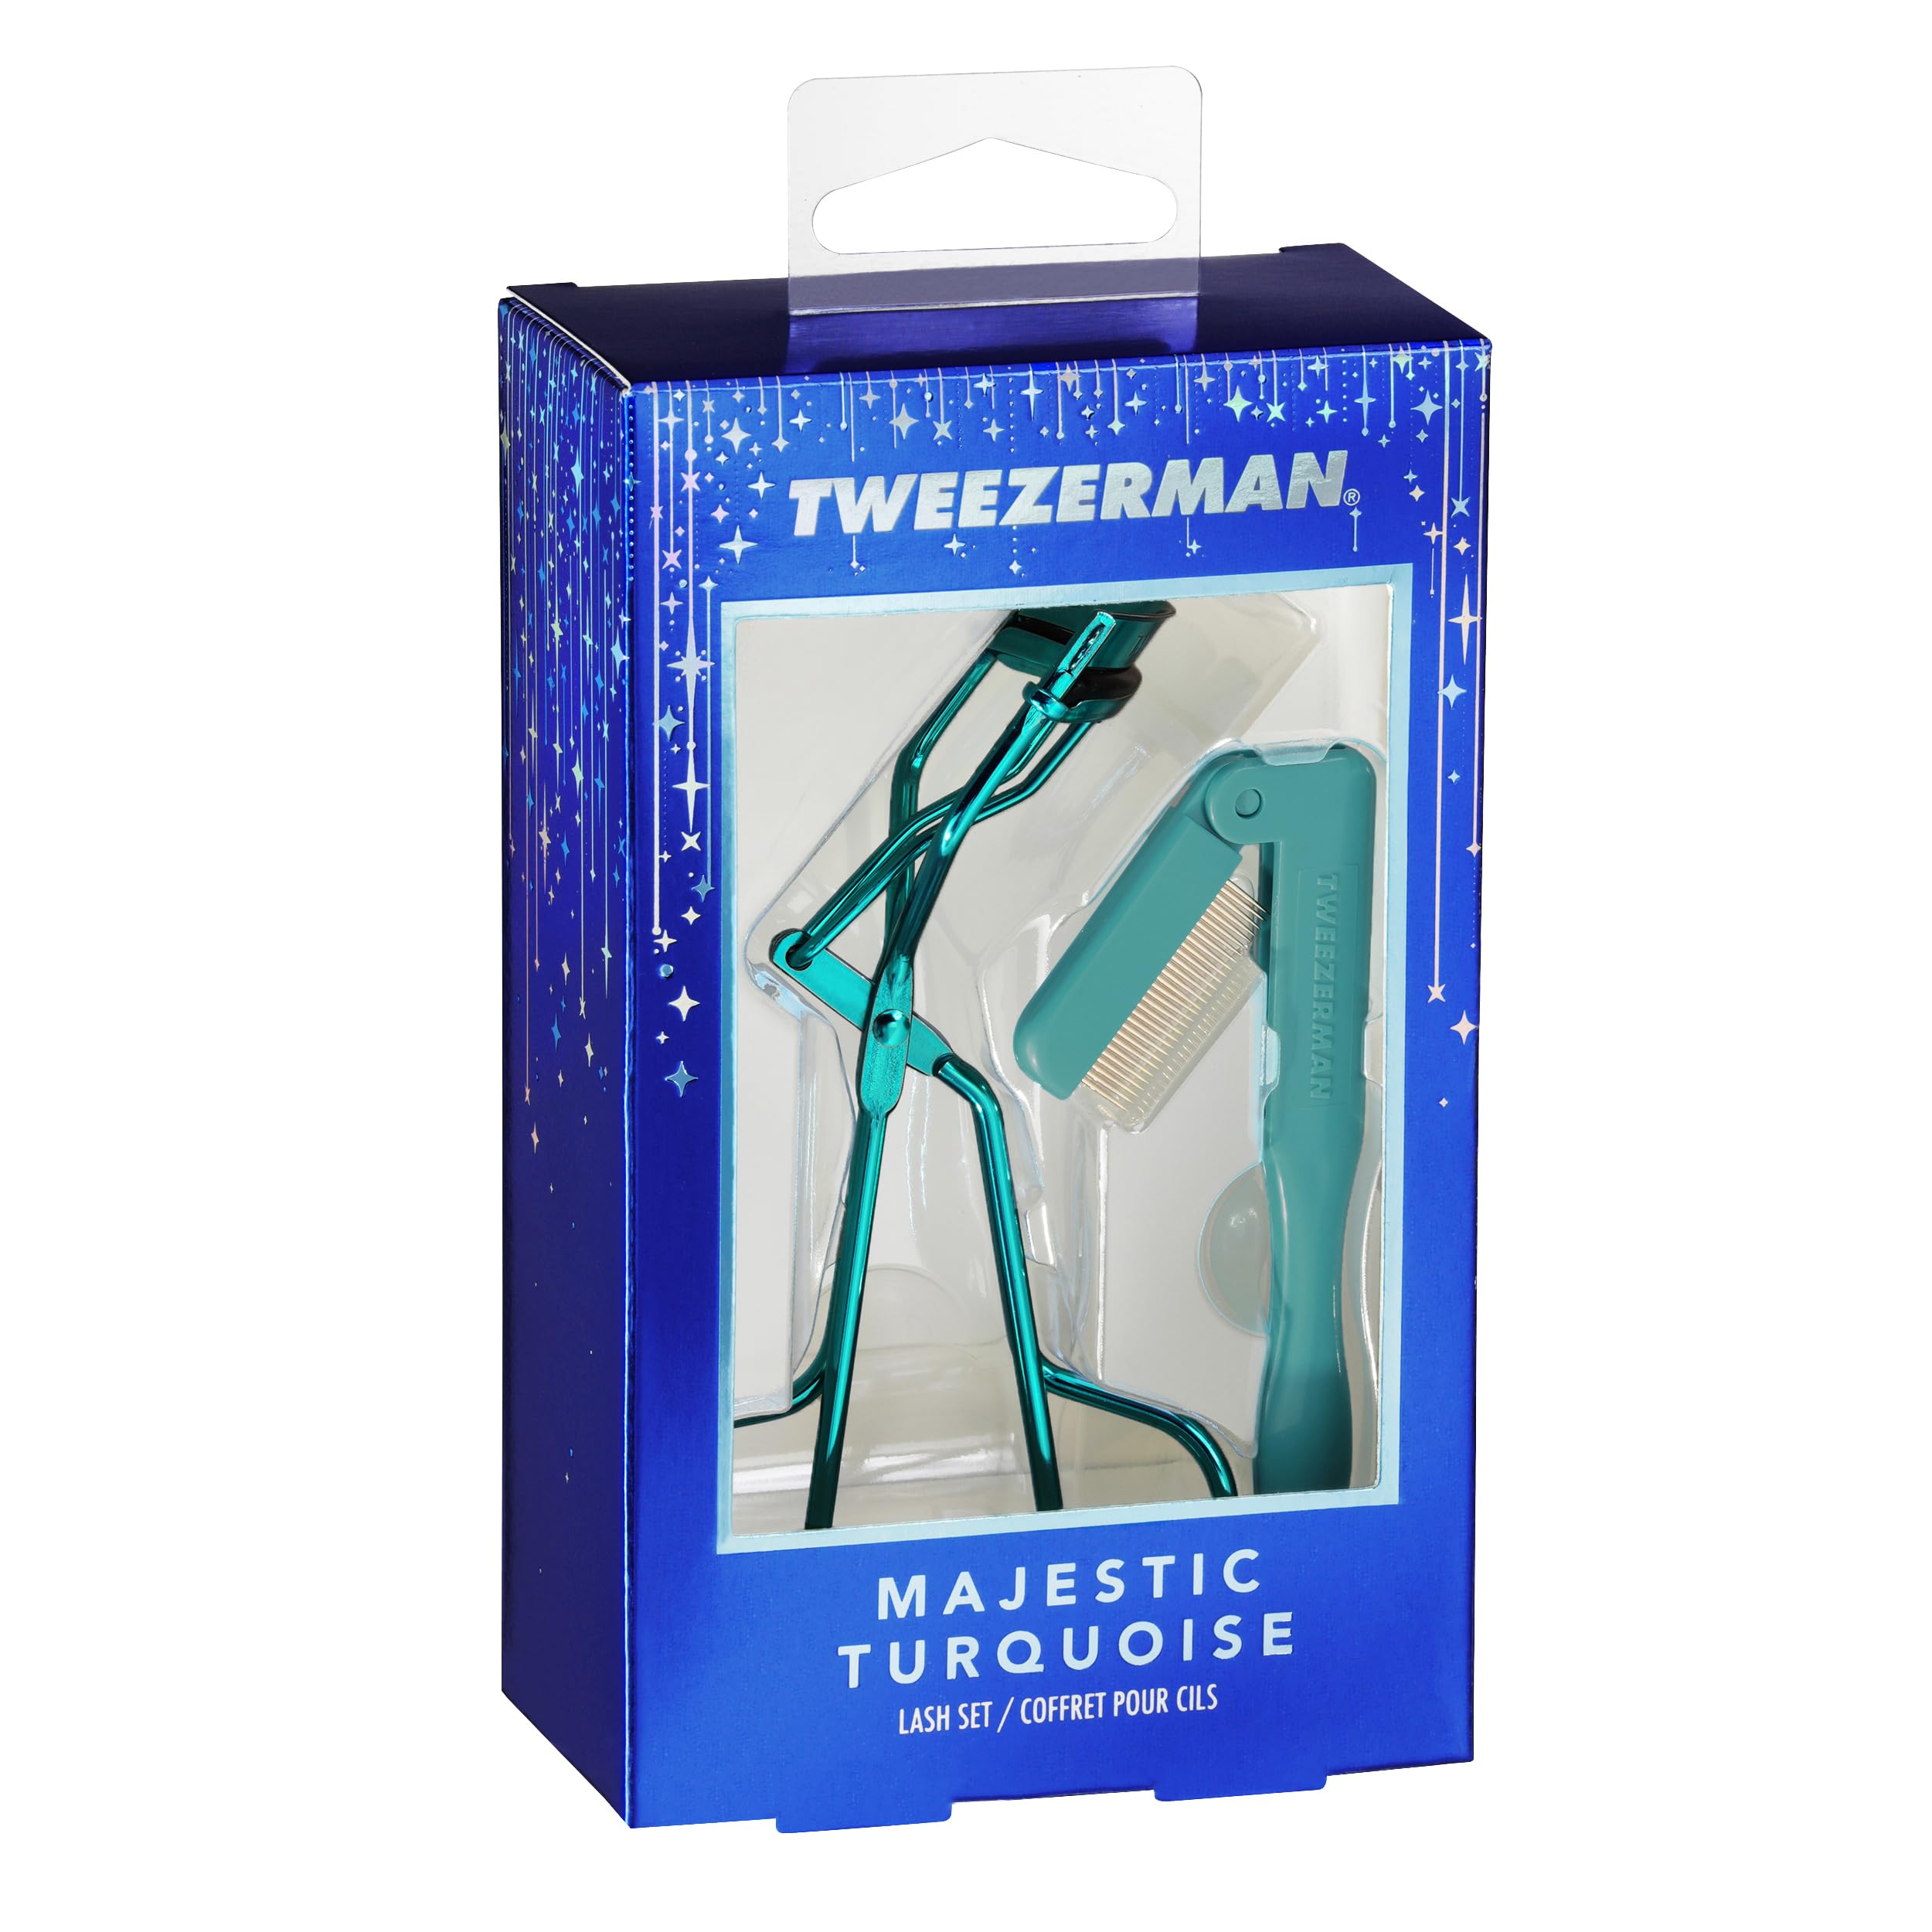 Tweezerman Majestic Turquoise Lash Set